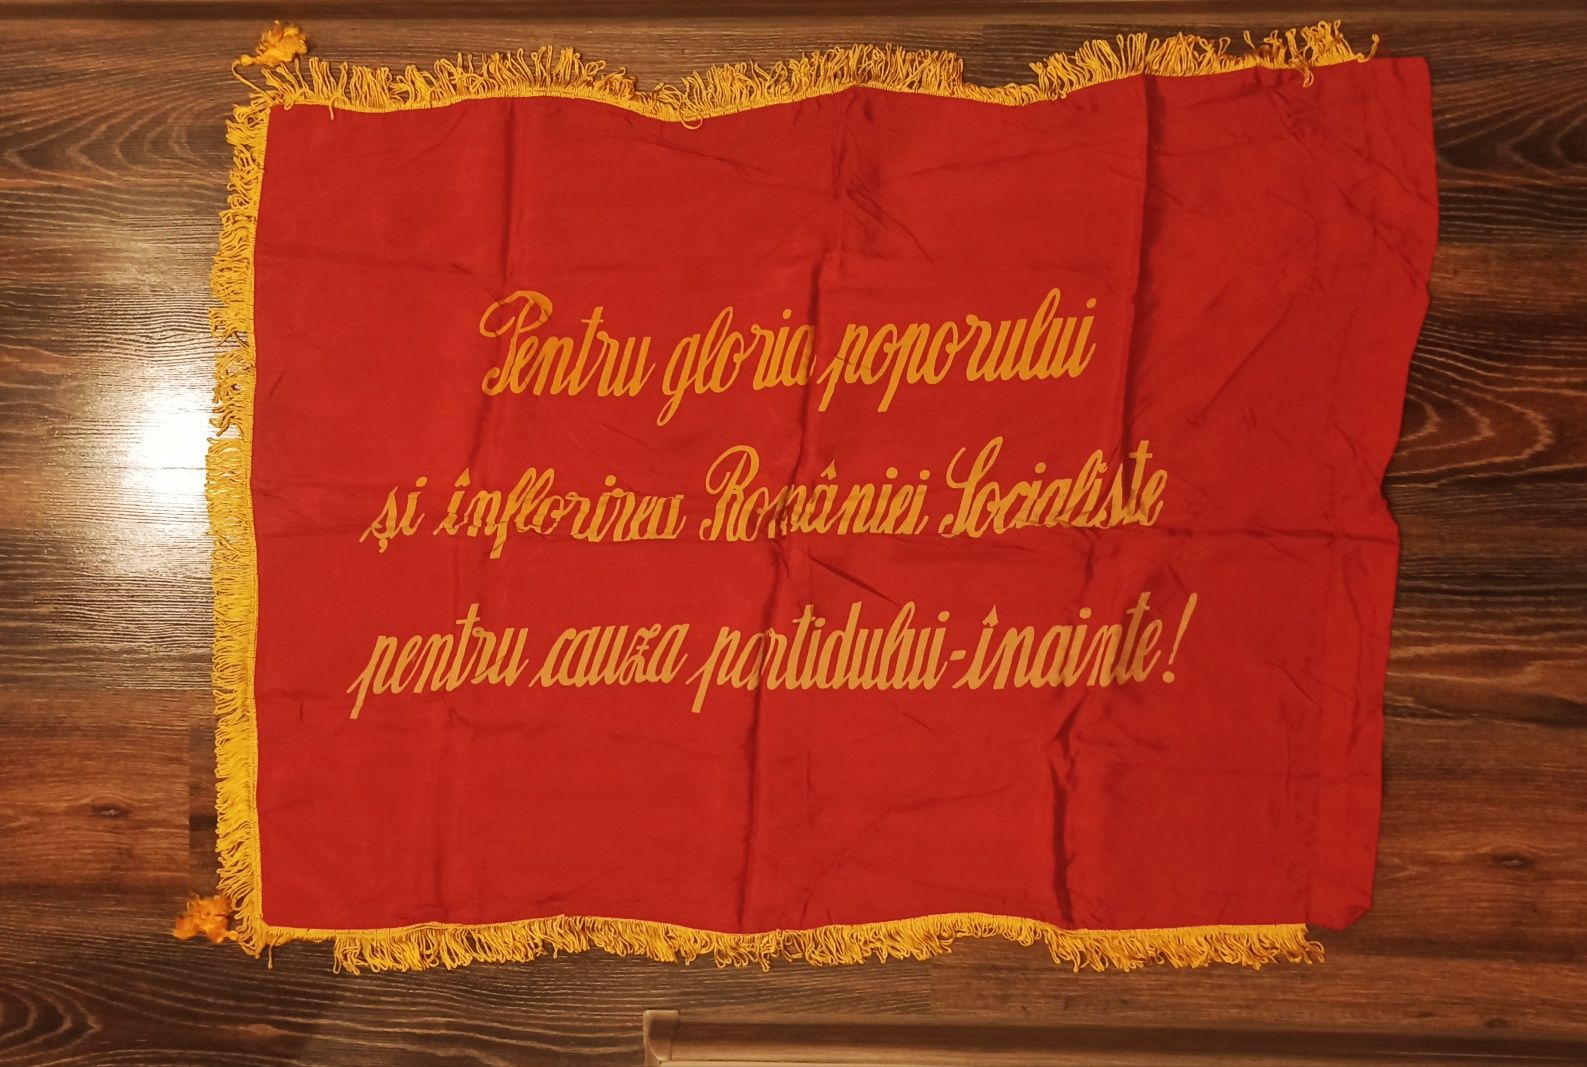 Steag/ drapel mătase RSR pionieri comunism, colecție rar muzeu